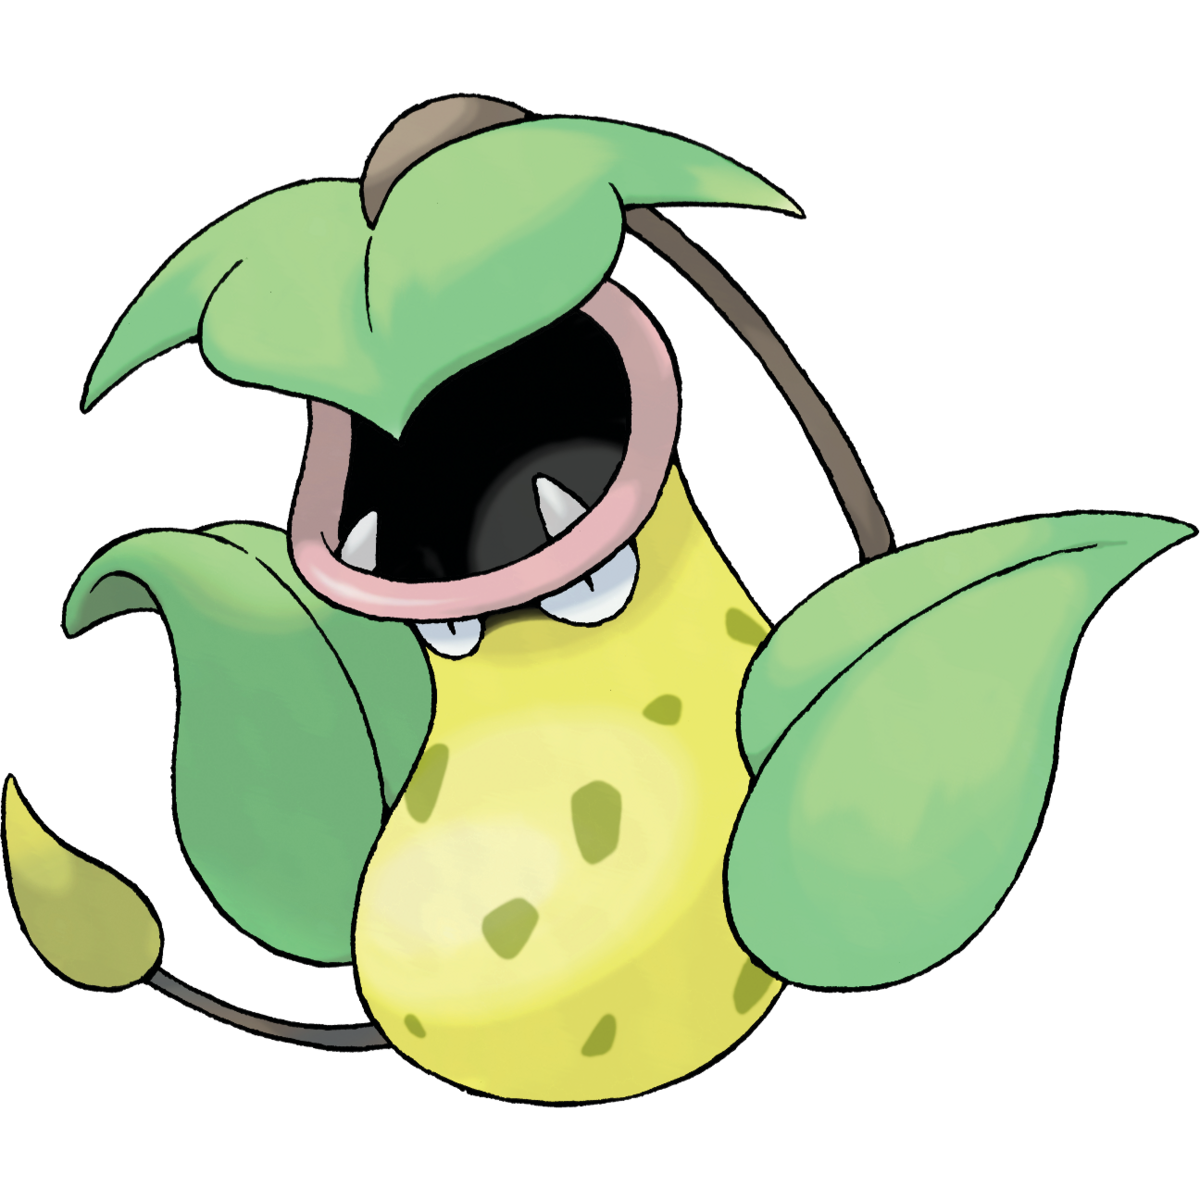 Pitcher plant pokemon